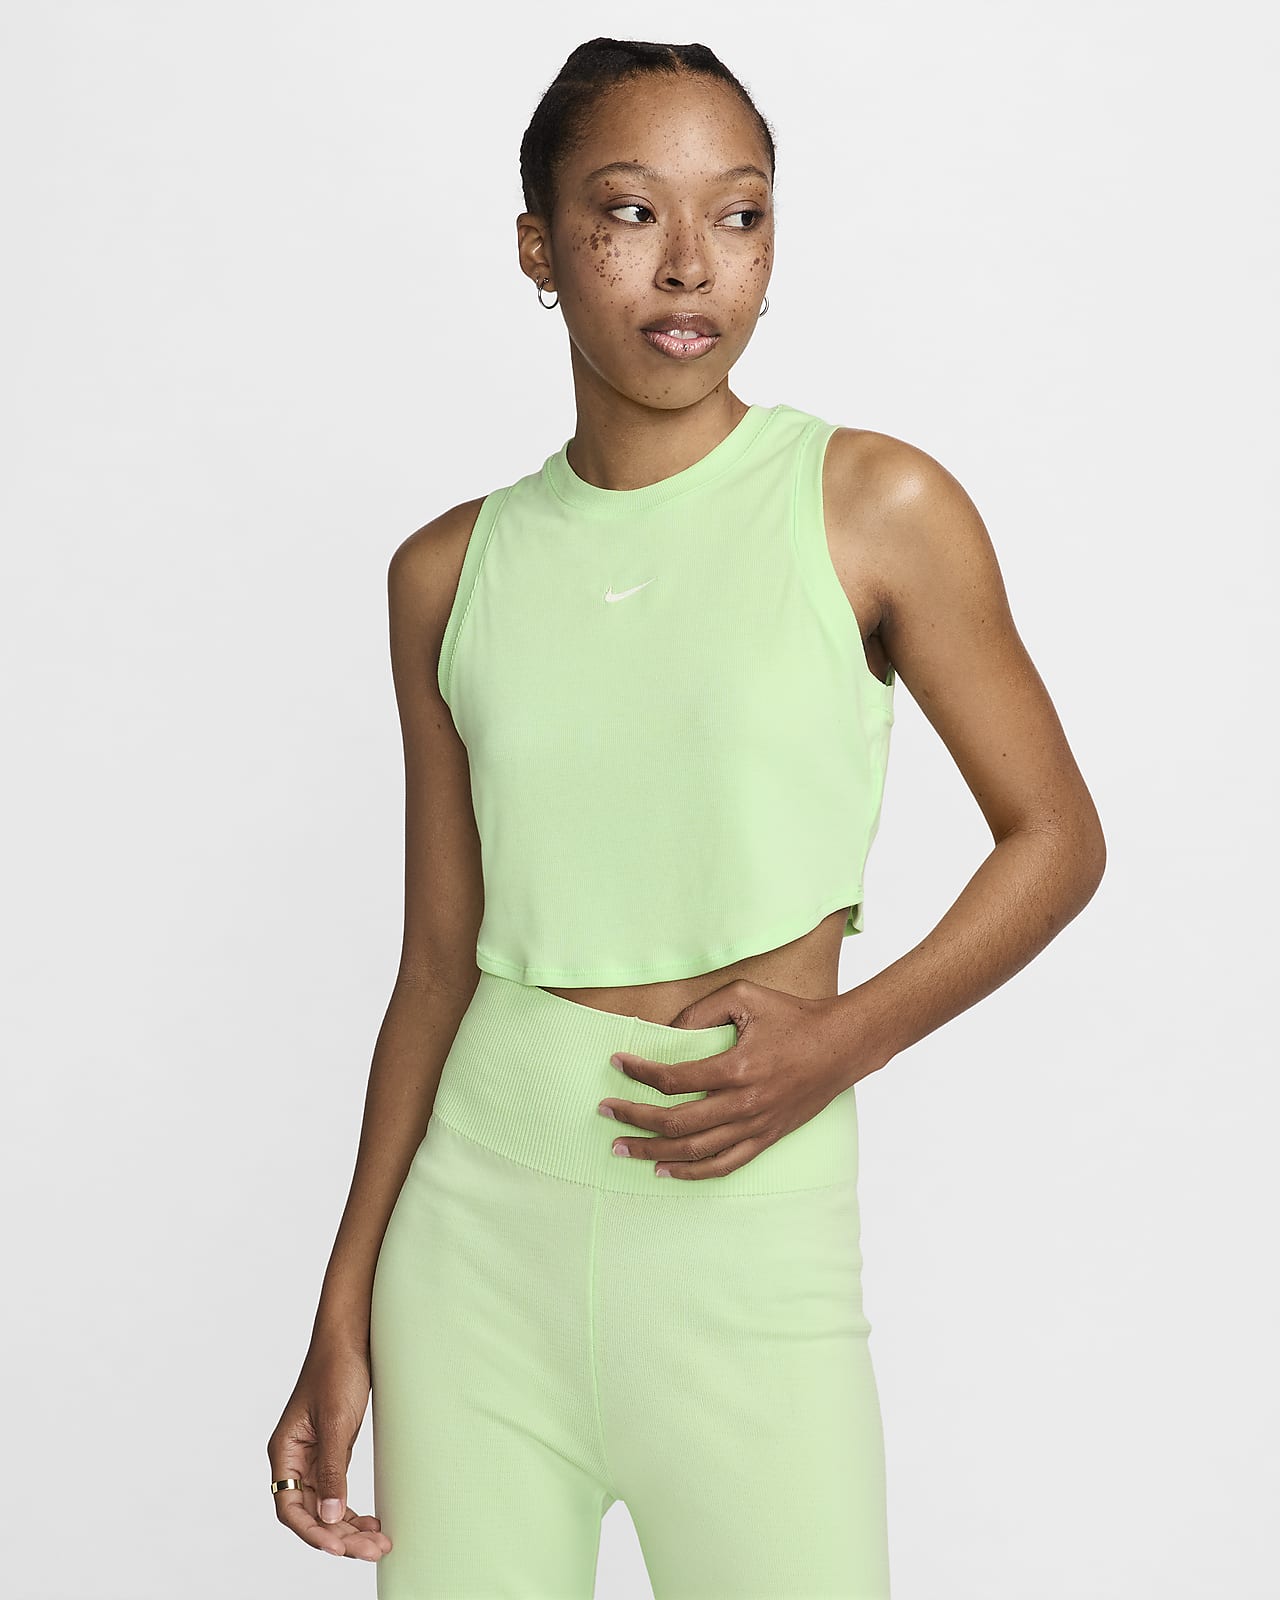 Women's Nike Pro Tank Tops & Sleeveless Shirts. Nike CA